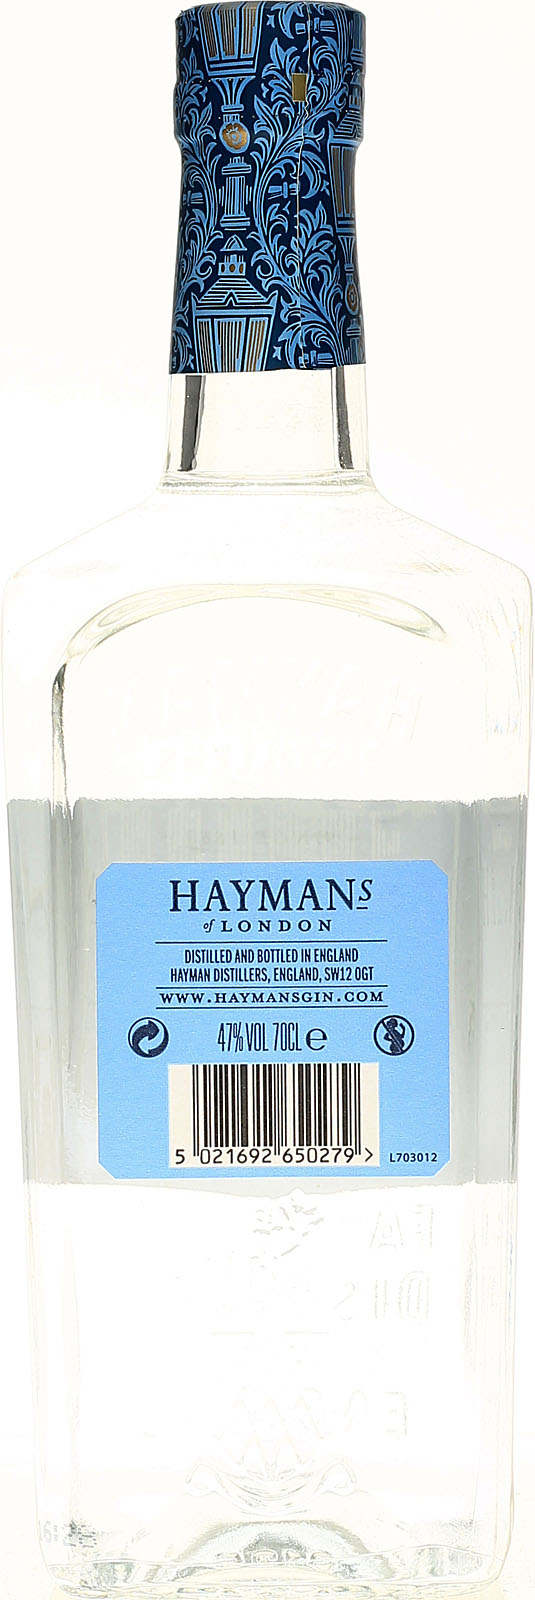 London Dry kaufen Haymans Gin barfish.de bei